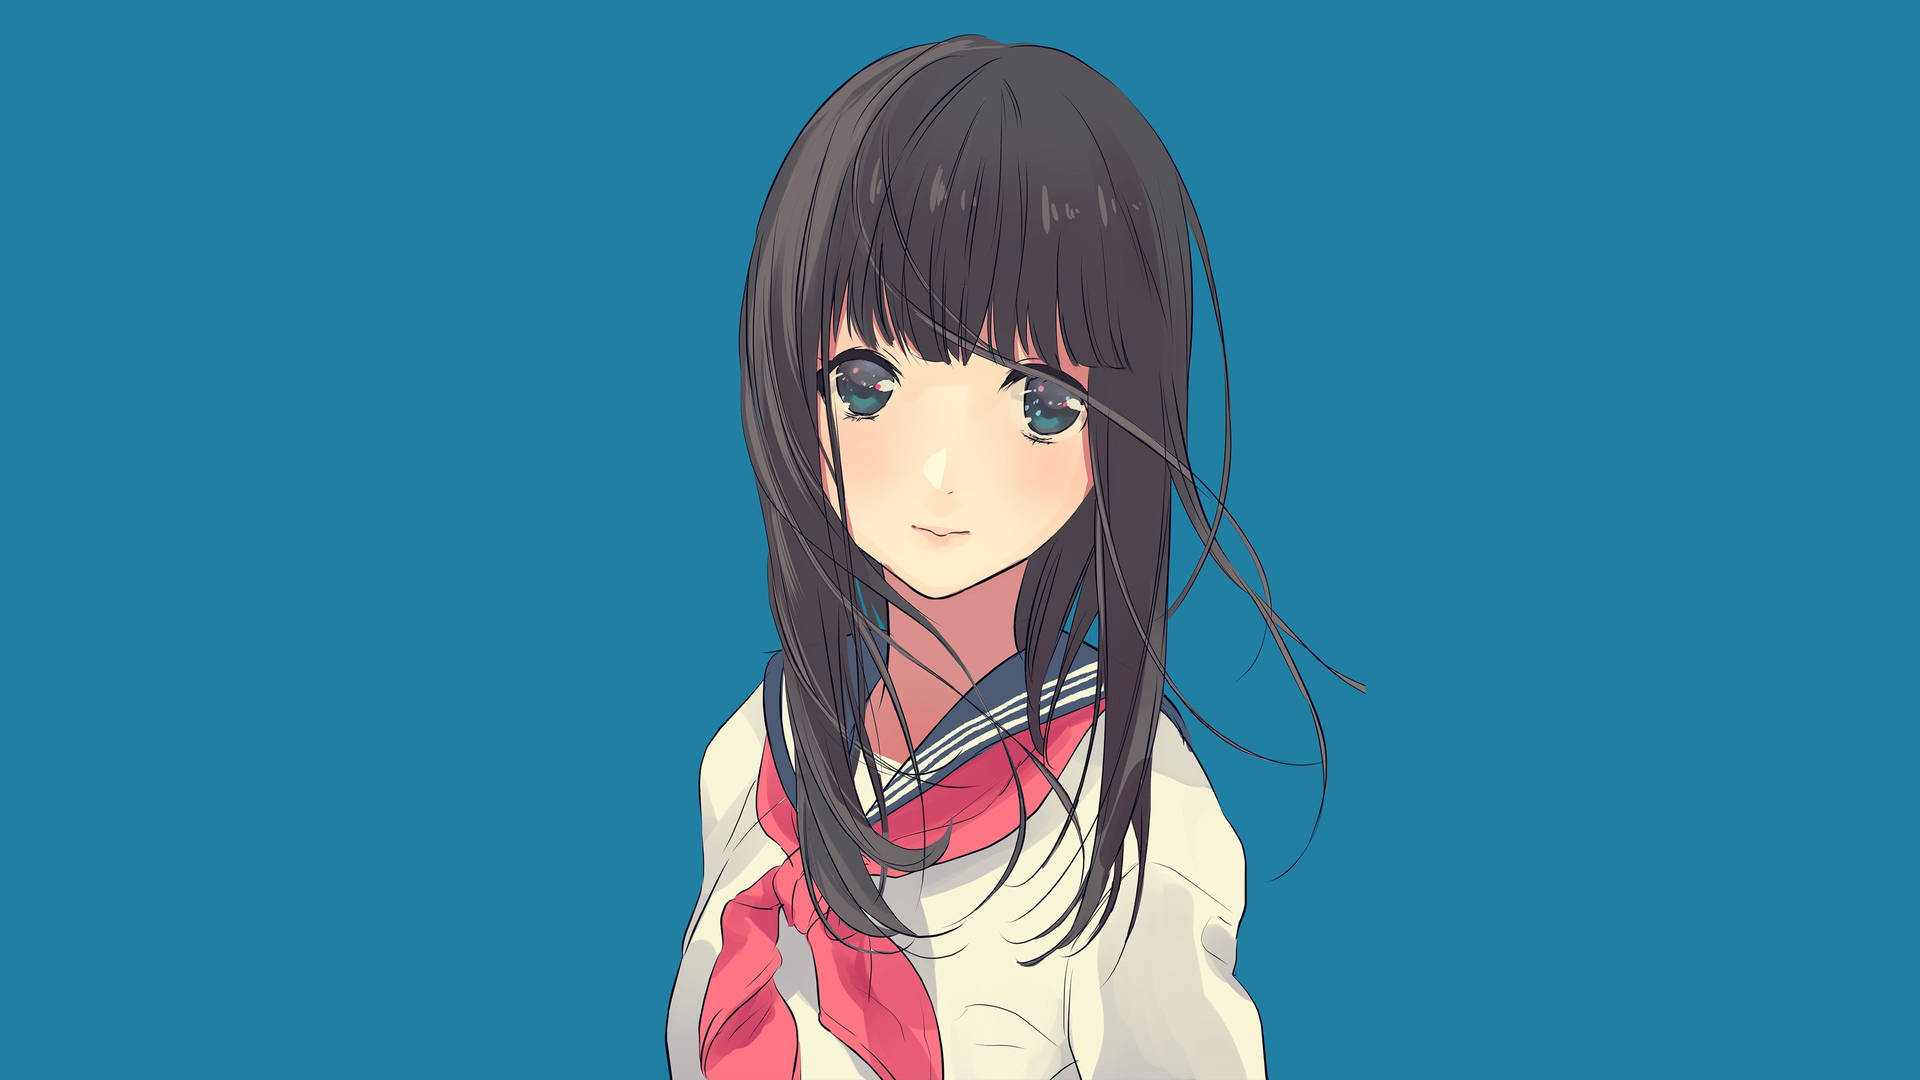 Cute Girl Anime In School Uniform Background